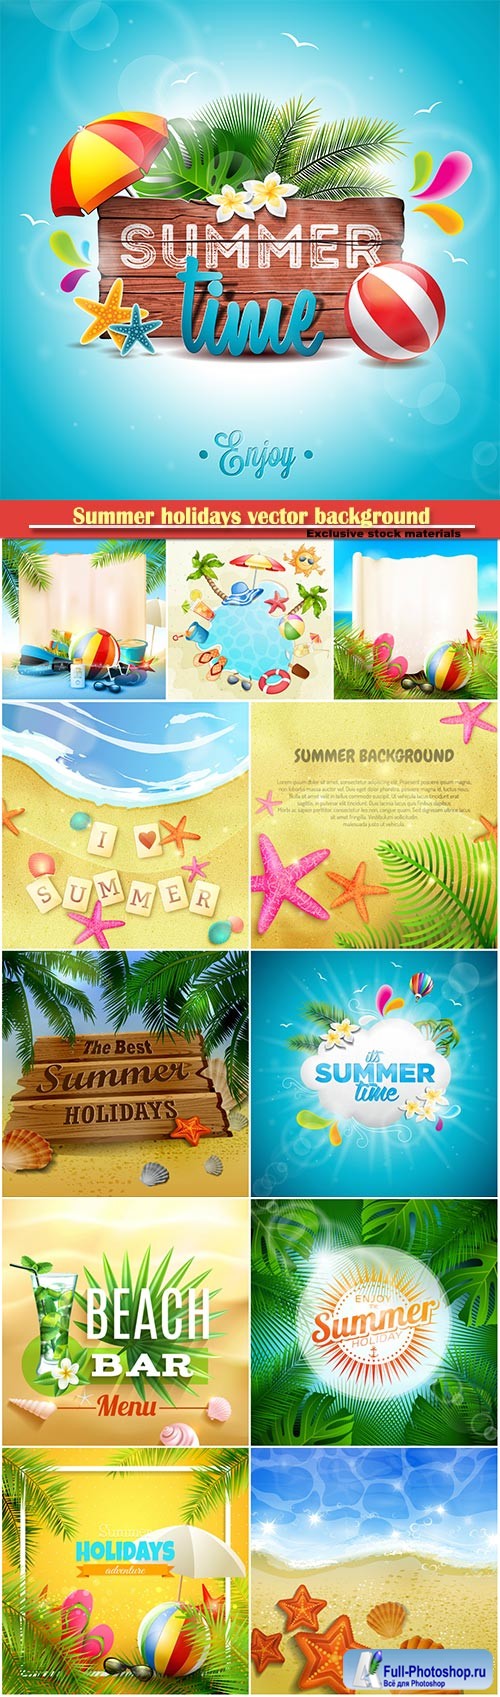 Summer holidays vector background, tropical beach, sea, fresh cocktails, sand # 5